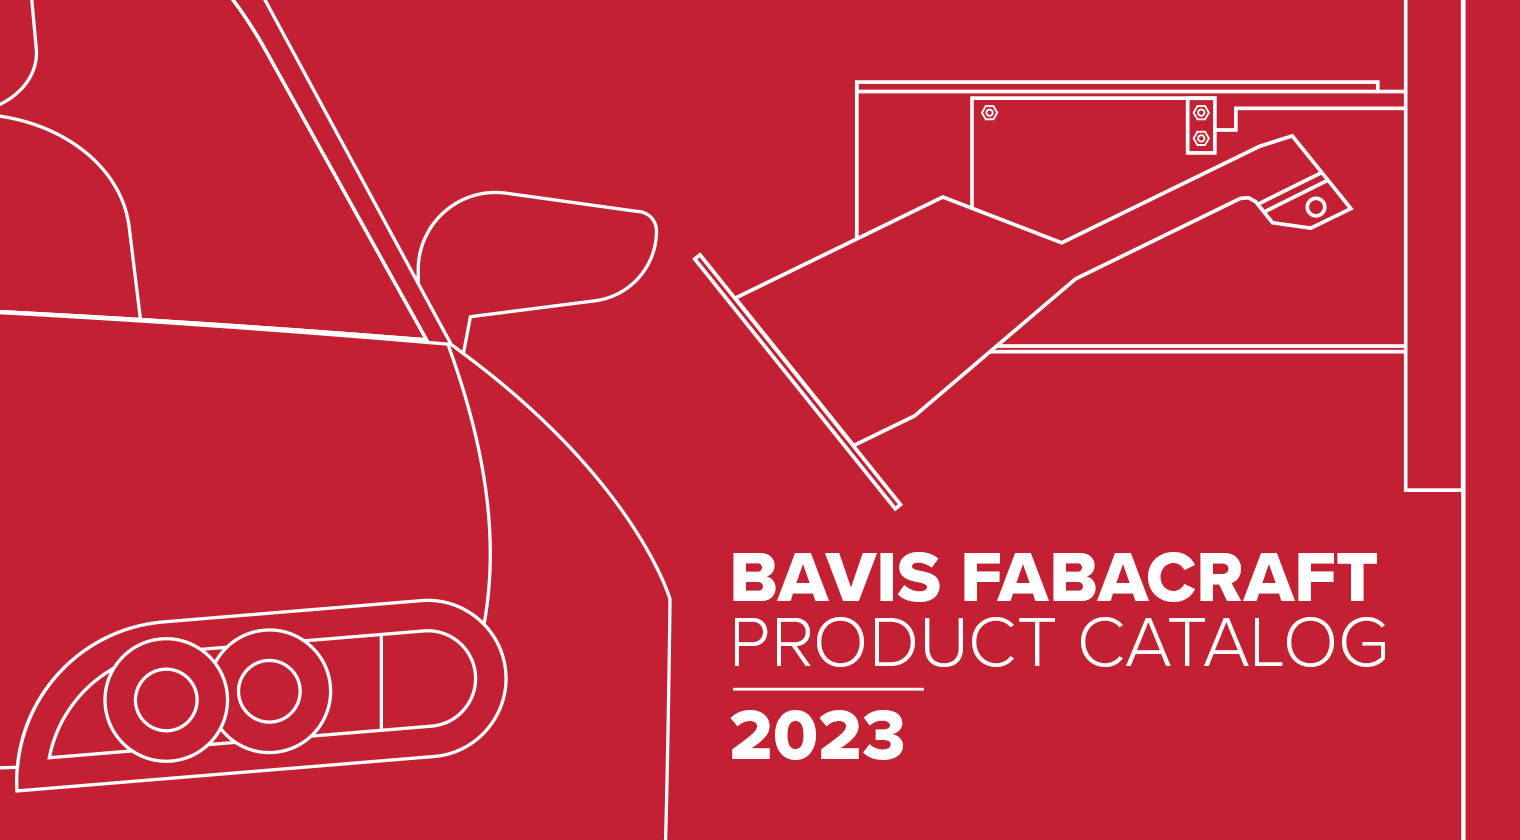 Download Bavis Fabacraft 2023 Product Catalog